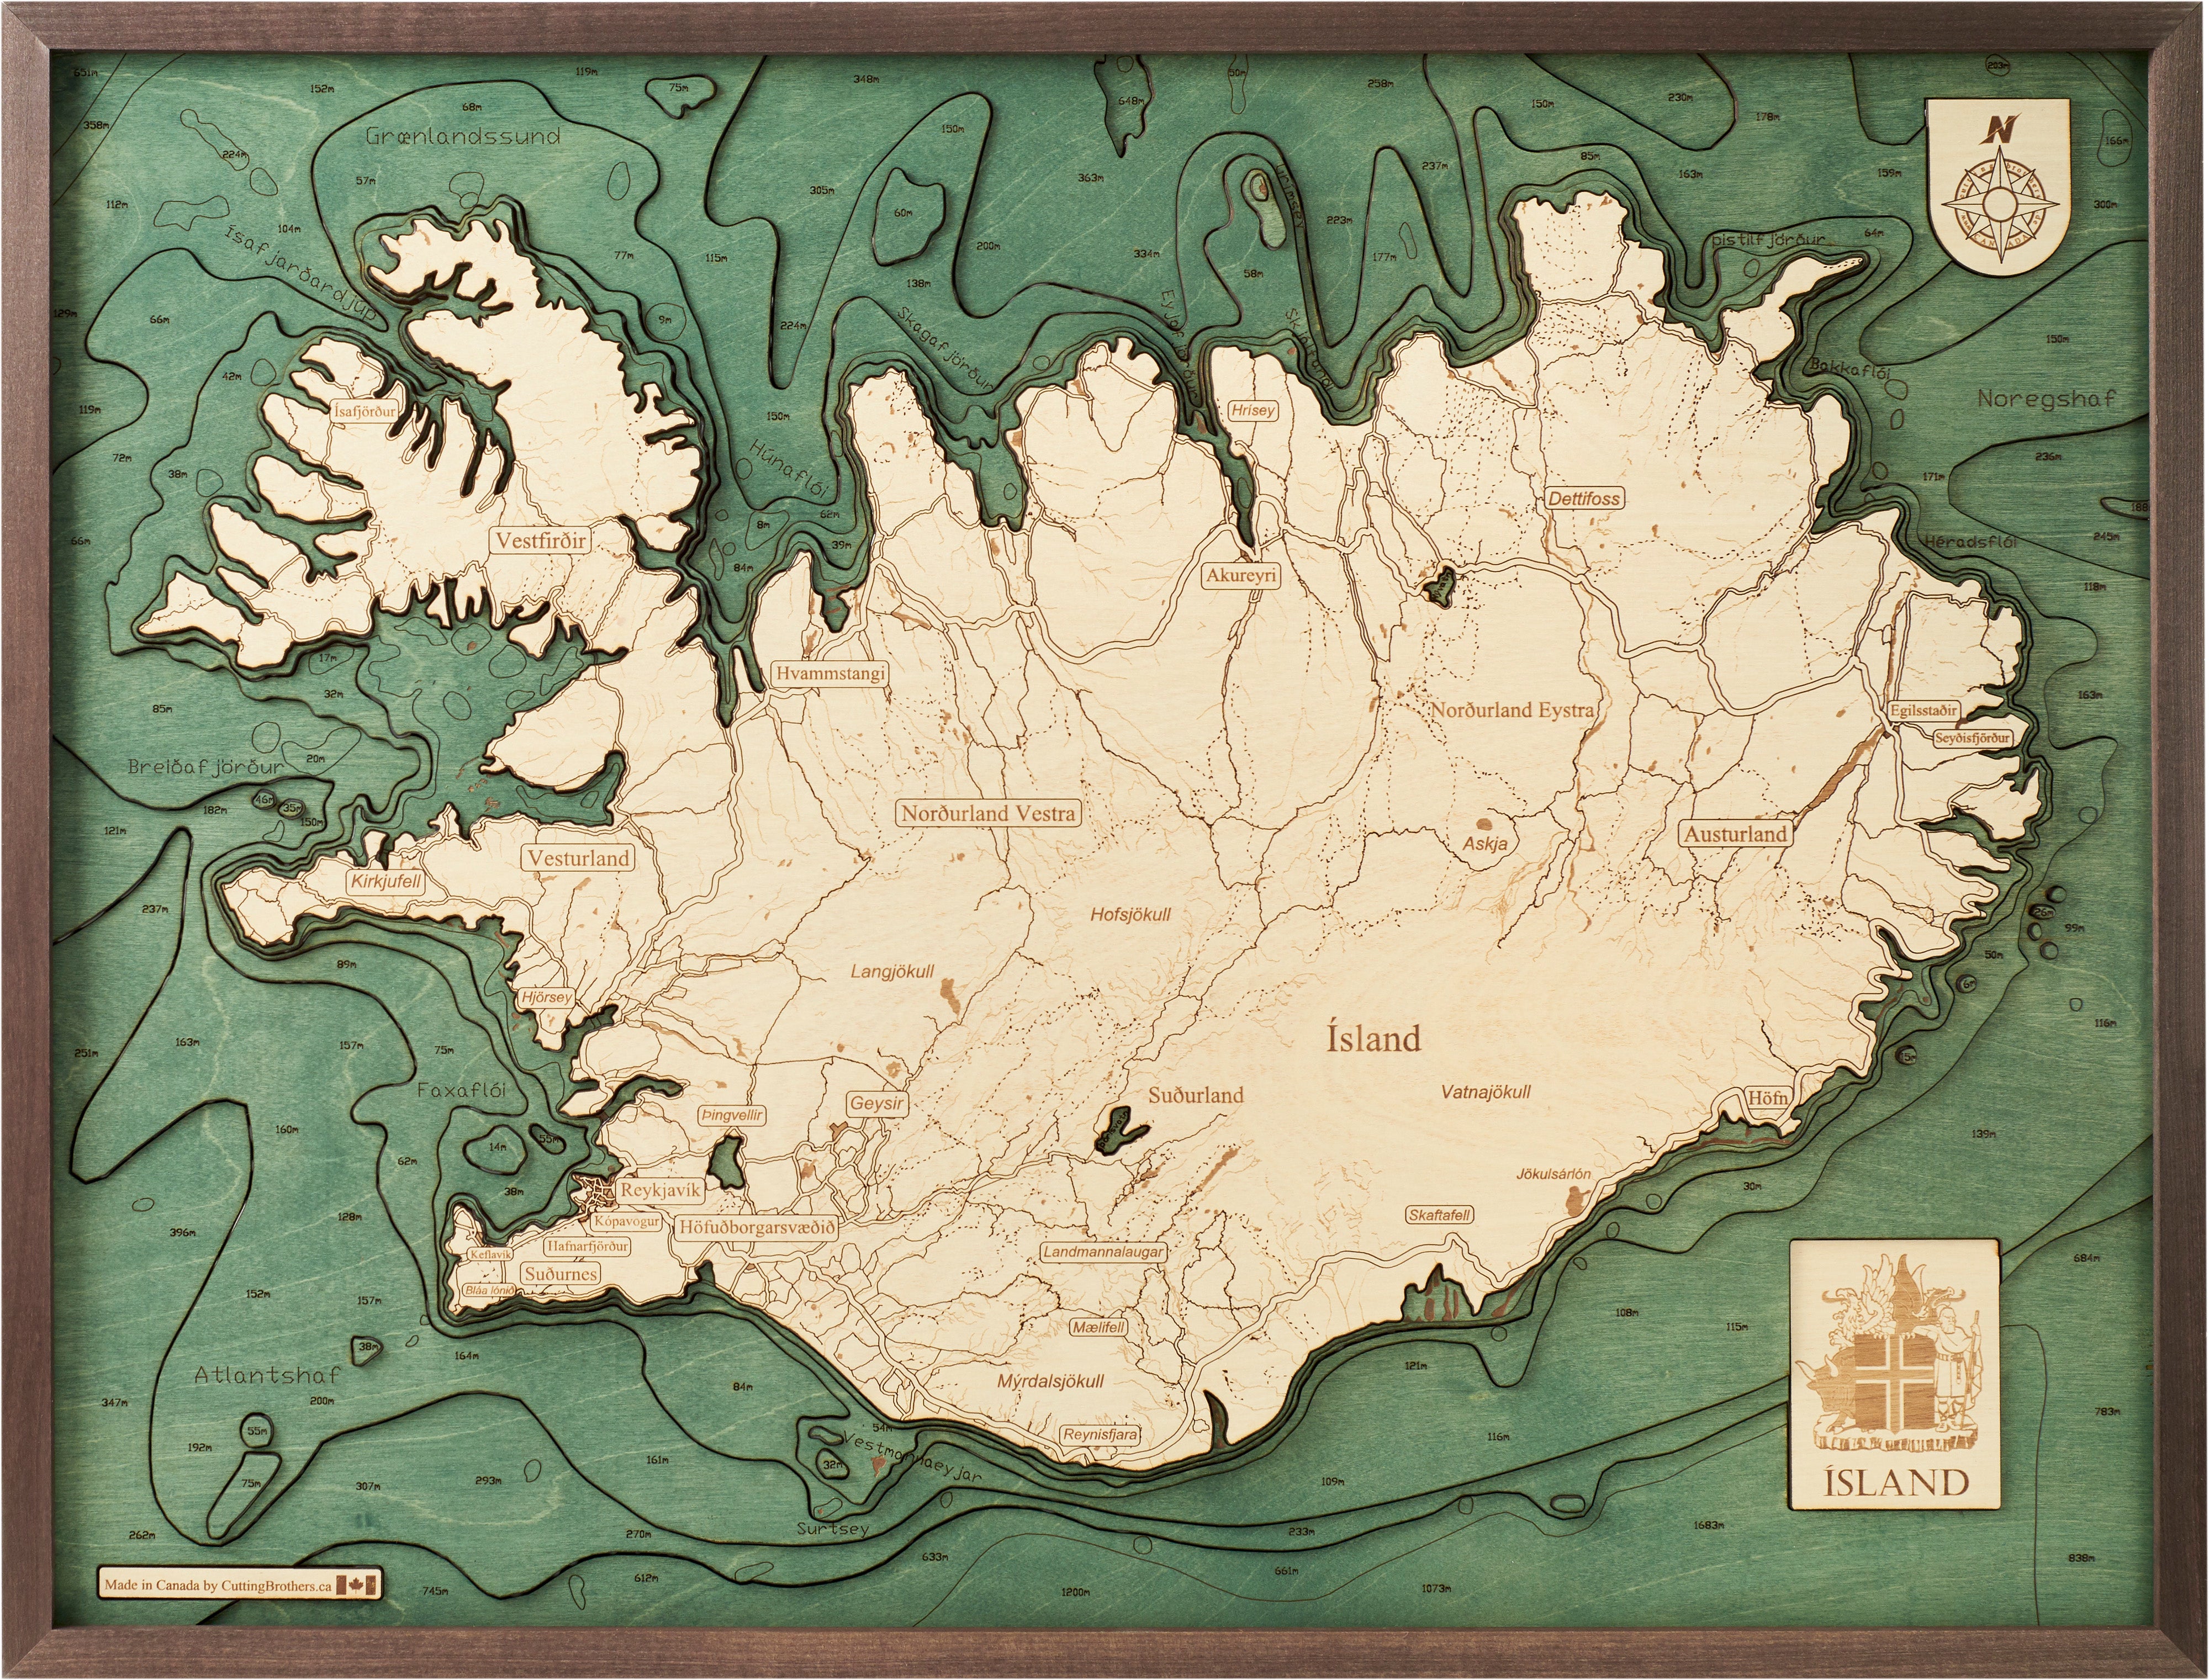 ISLAND 3D Wooden Wall Map - Version L 